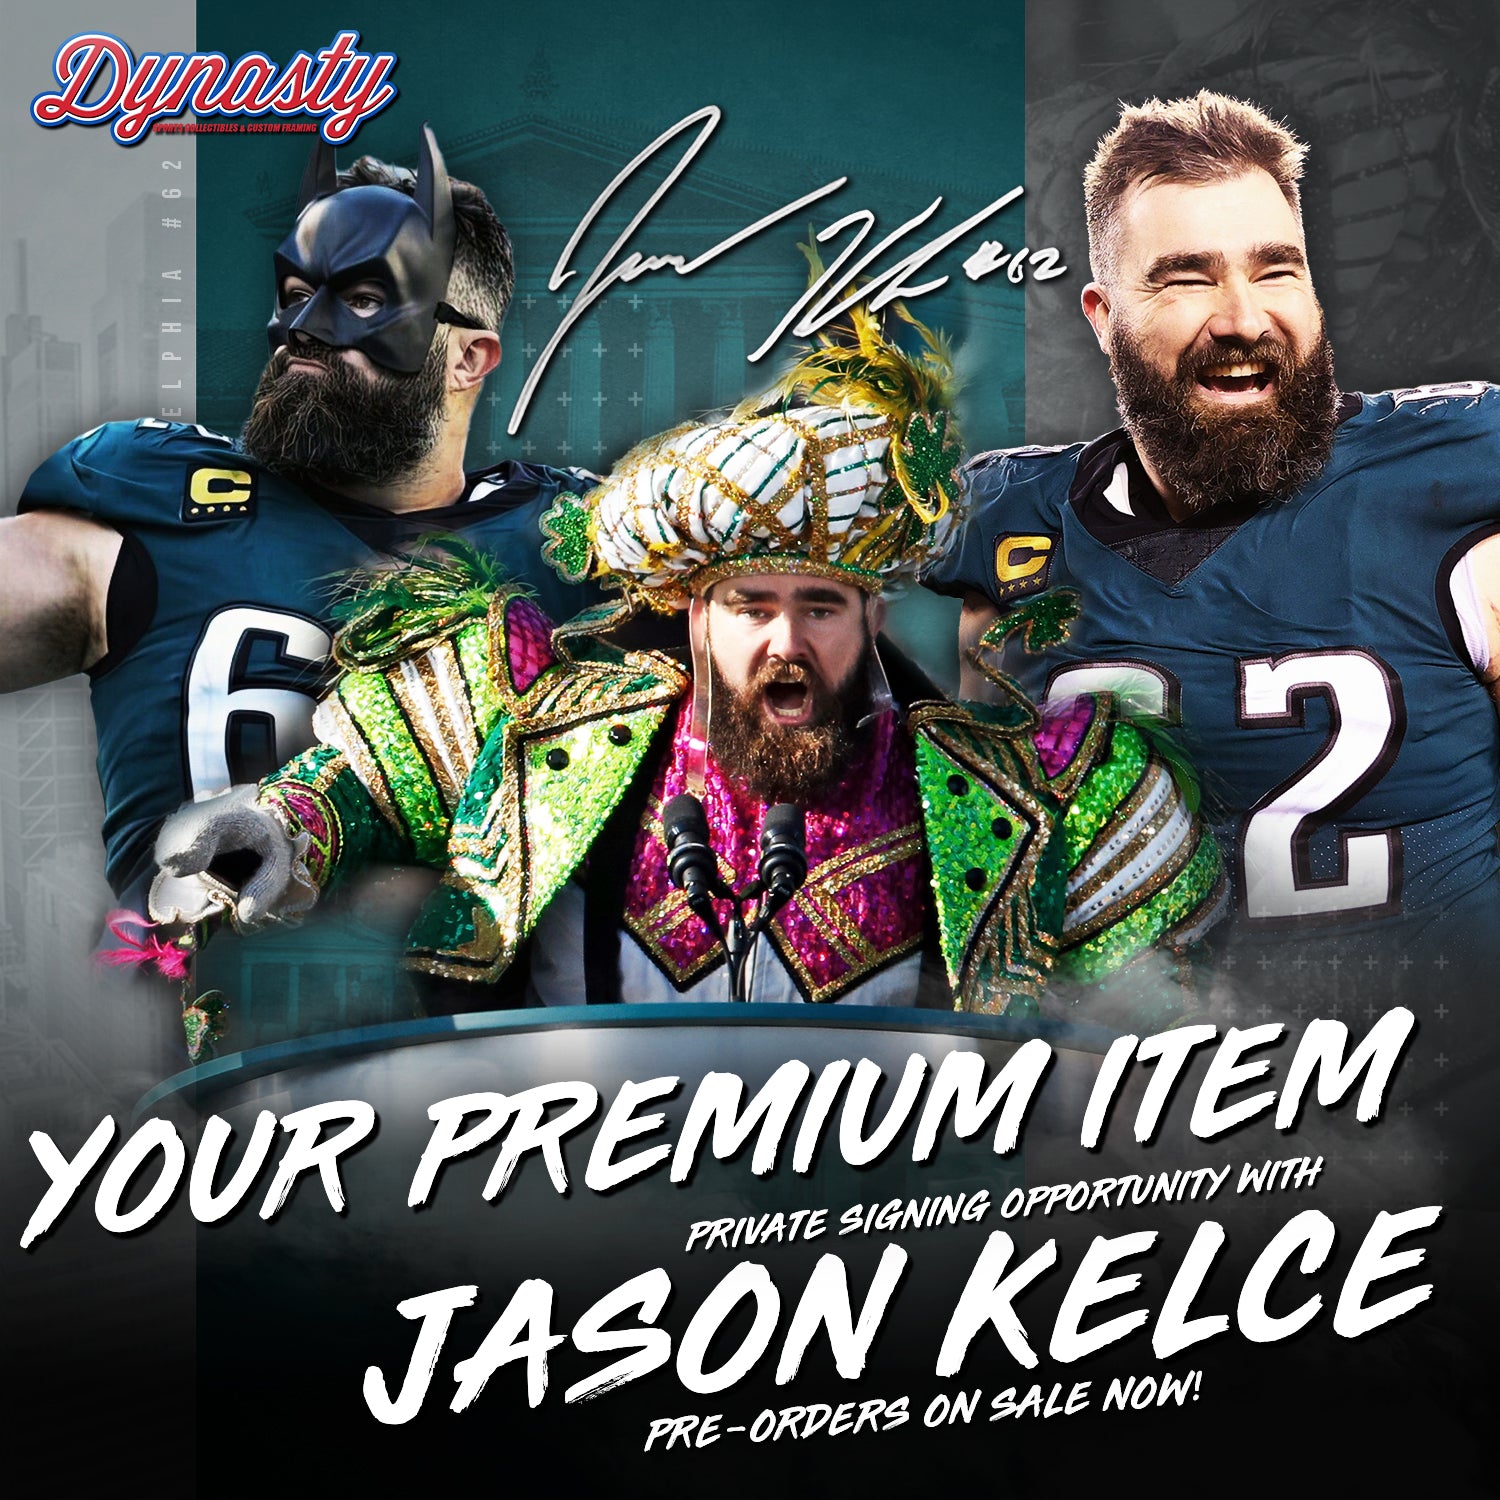 Jason Kelce Philadelphia Eagles Autograph Signing (Your Item) - Dynasty Sports & Framing 